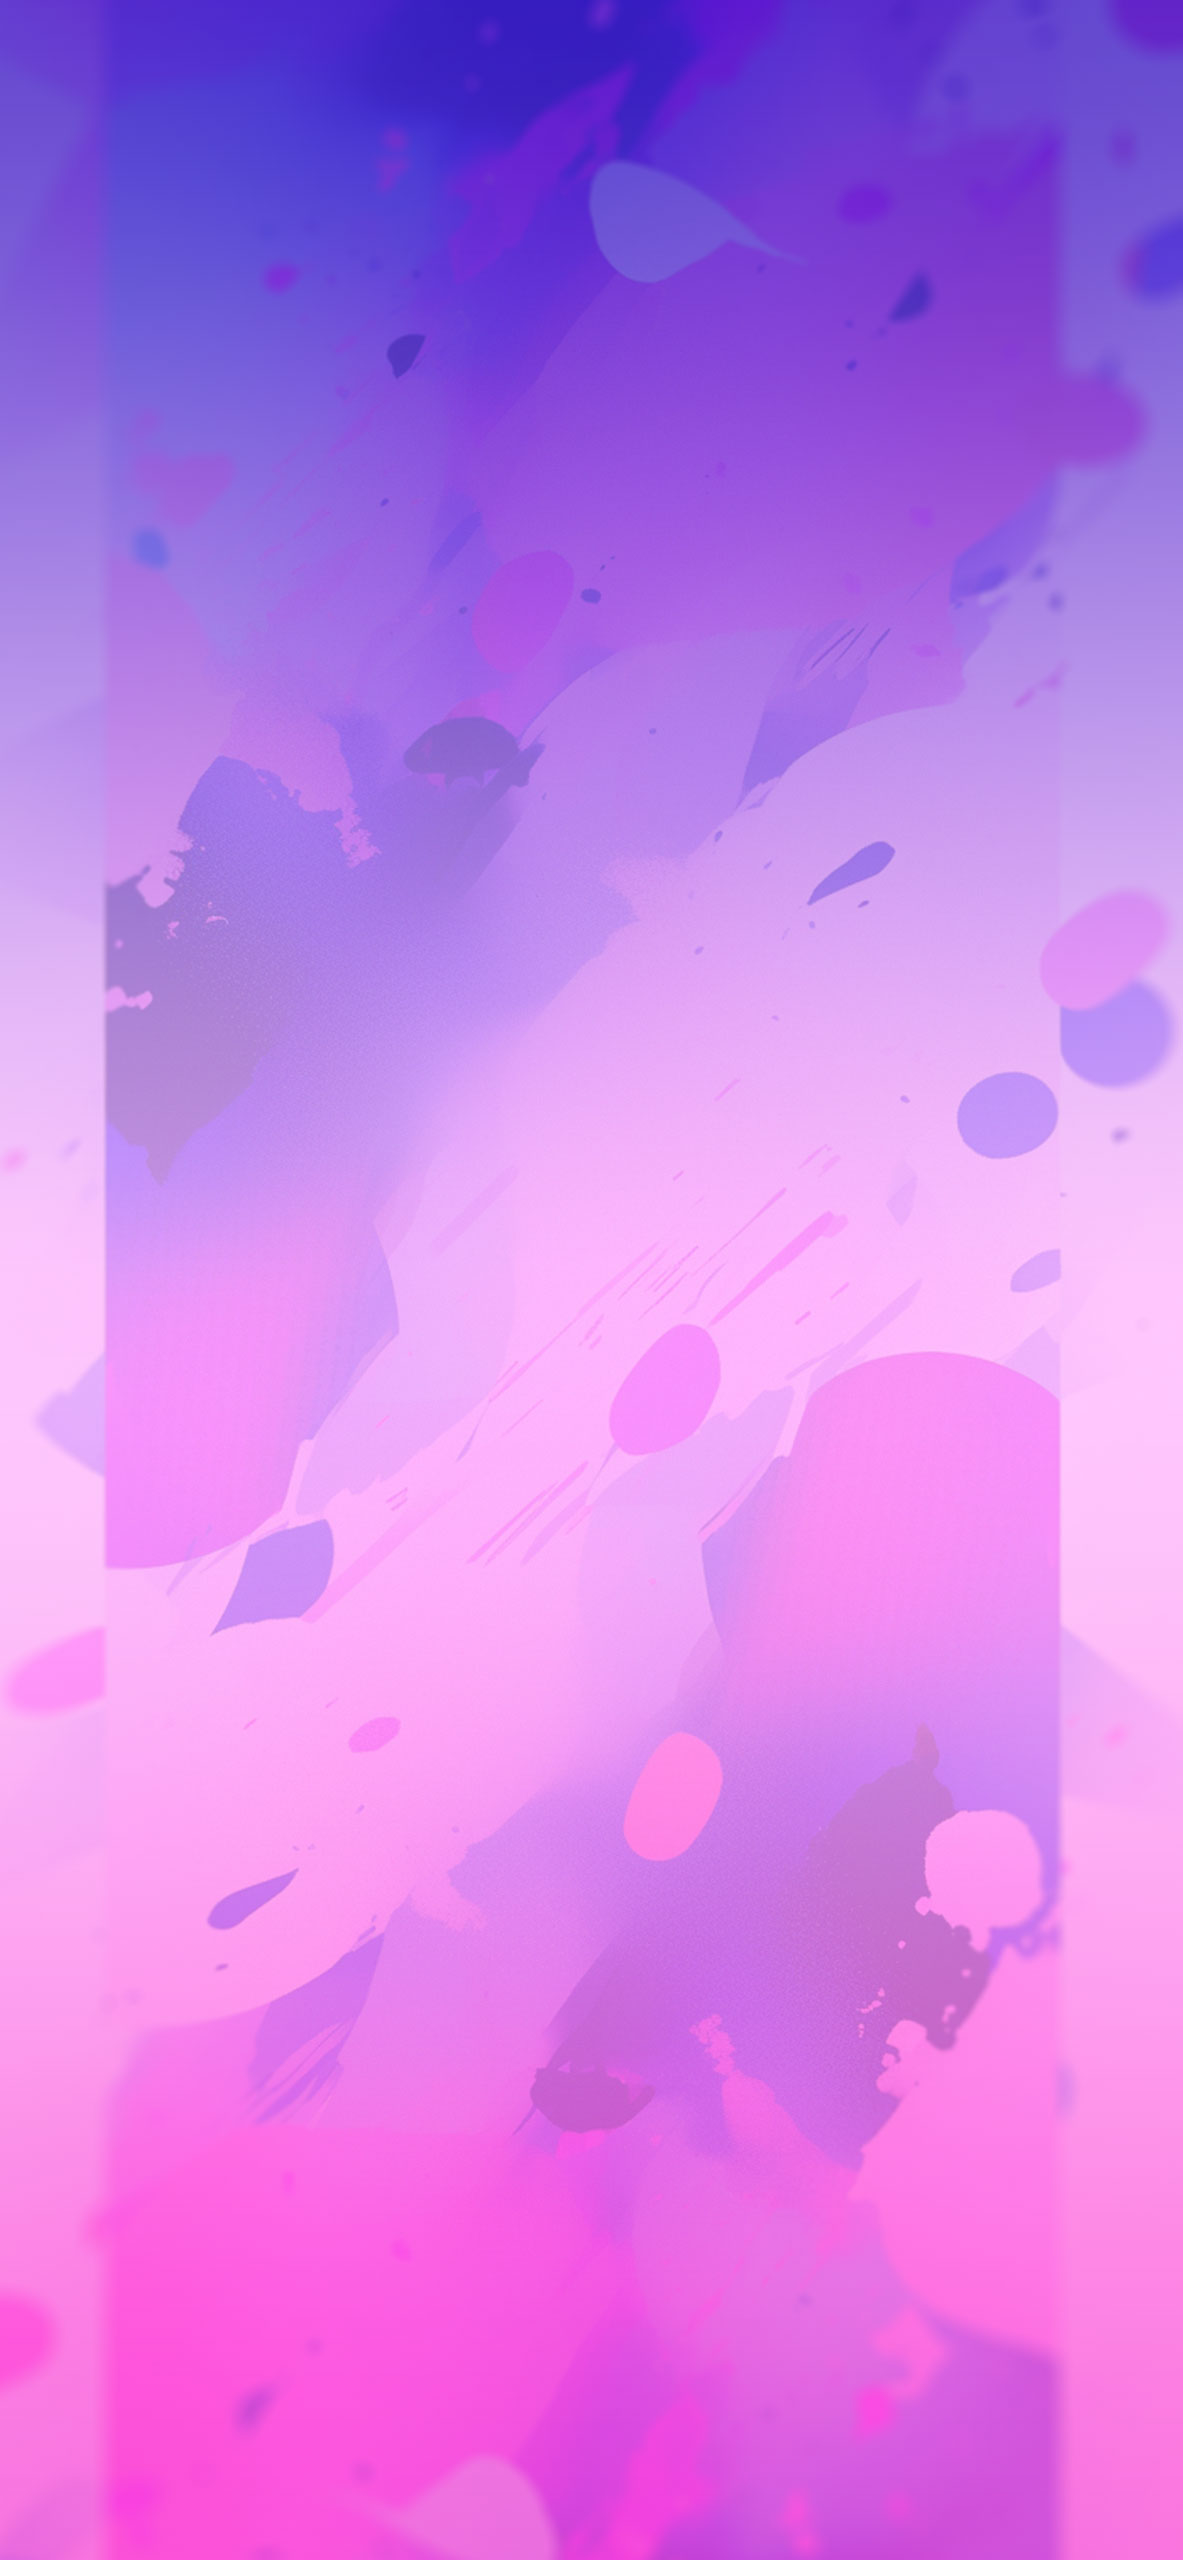 Abstract pink & purple art wallpaper abstract pattern free wal